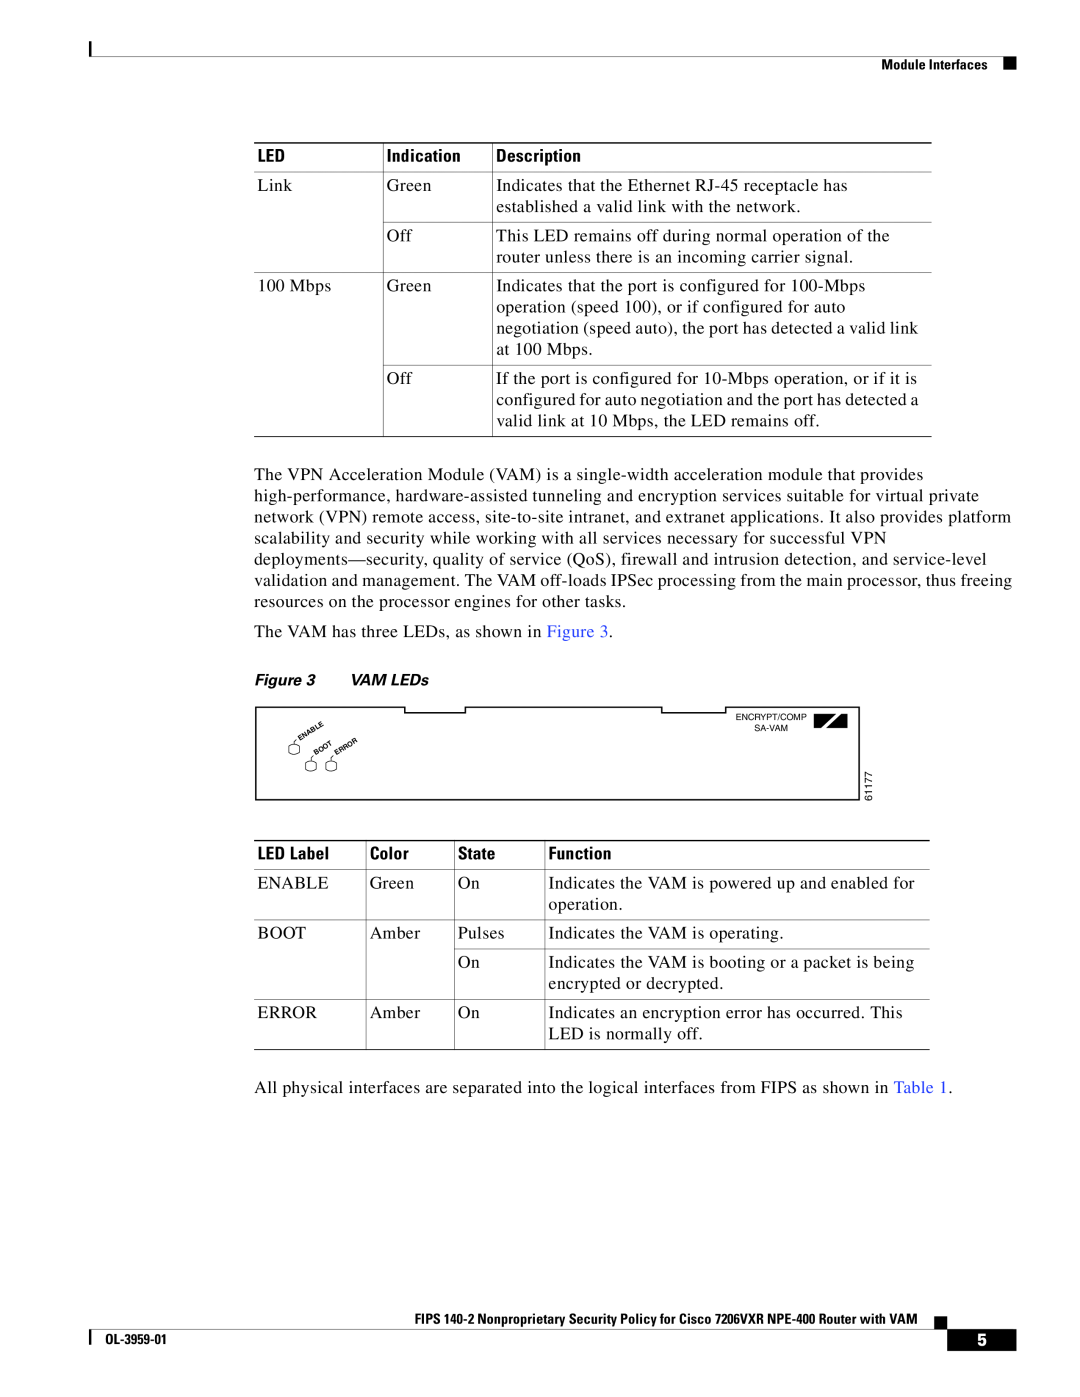 Cisco Systems 7206VXR NPE-400 manual LED Label, Color, State, Function, Indication, Description 